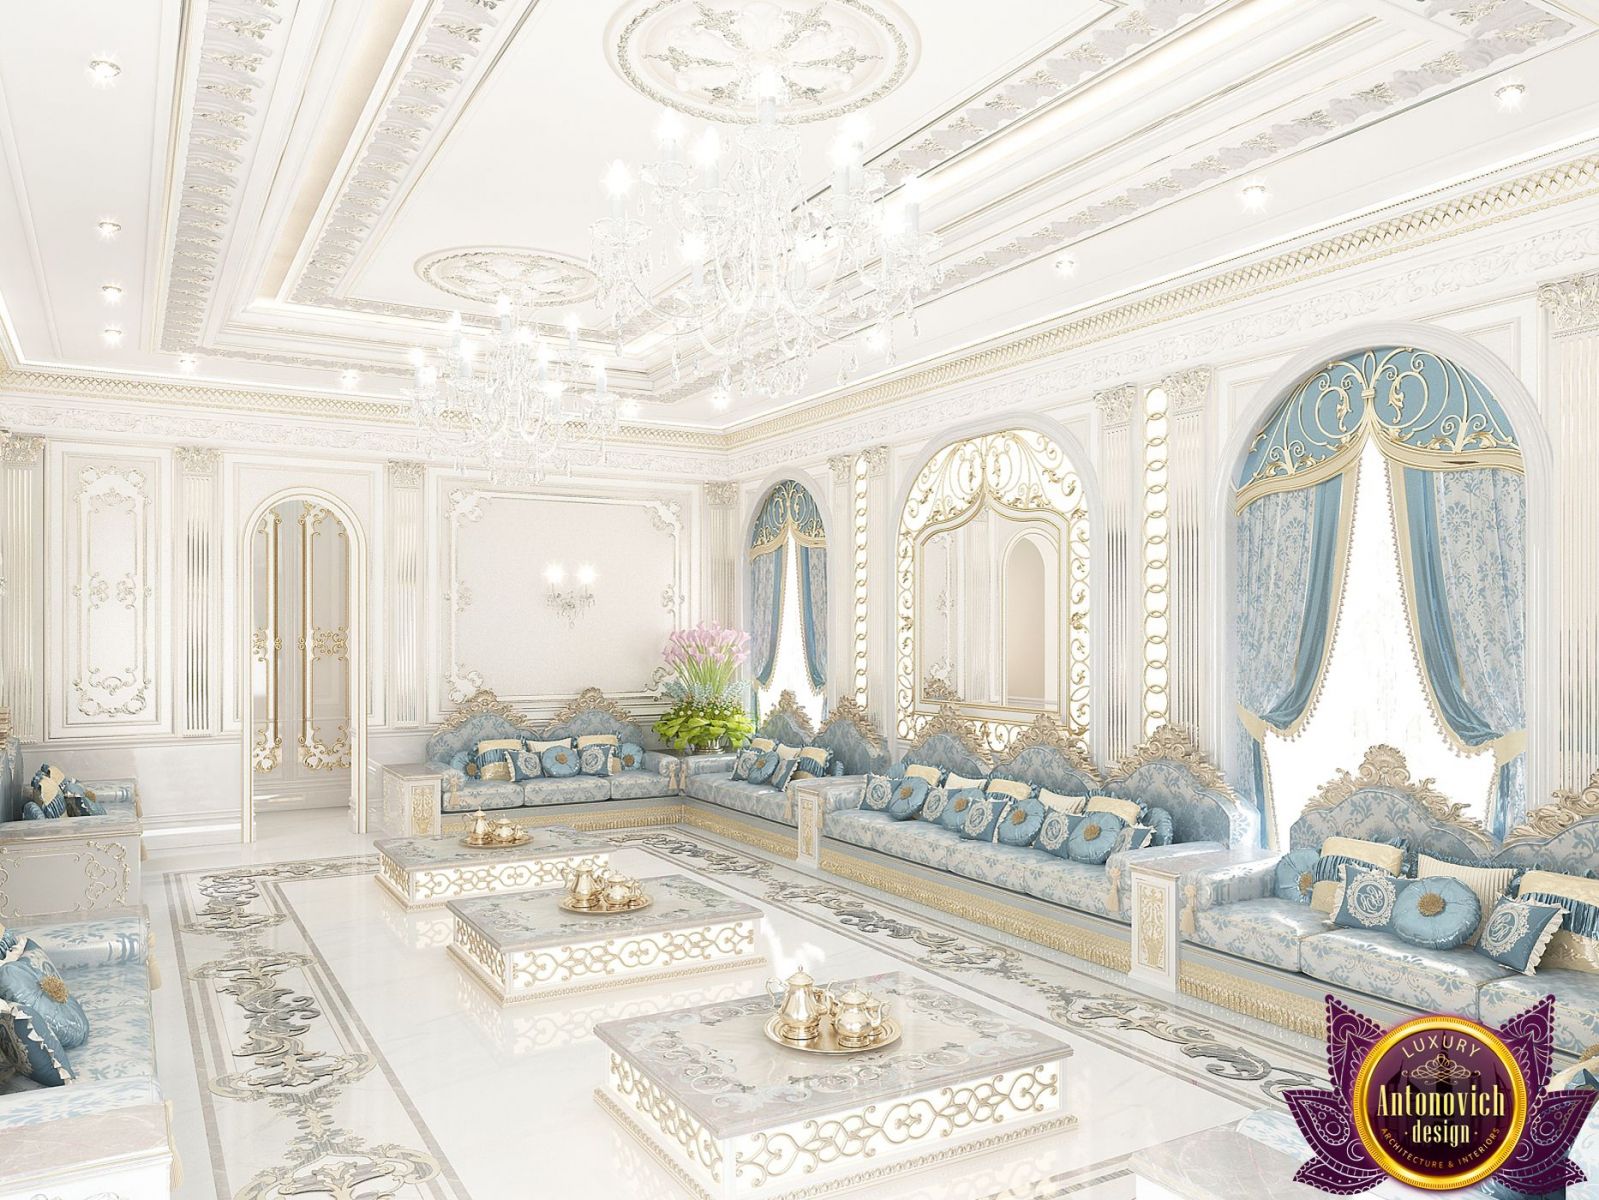 Modern Majlis design featuring unique lighting and furniture